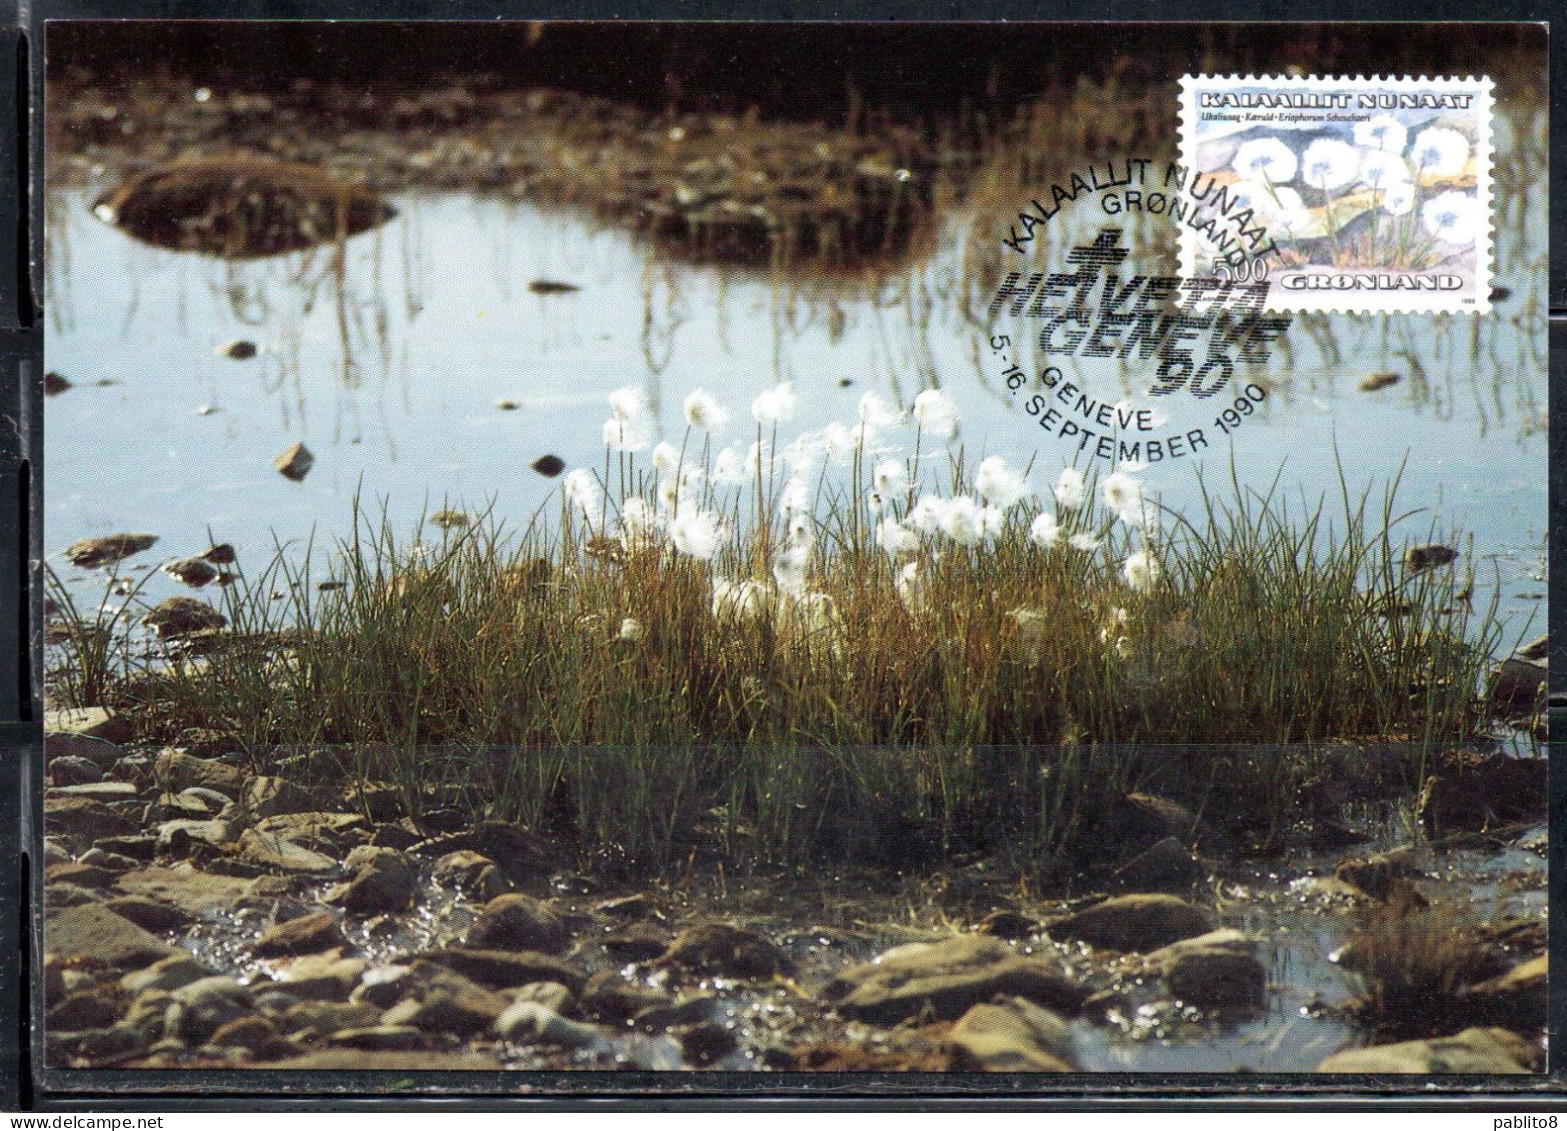 GREENLAND GRONLANDS GROENLANDIA GRØNLAND 1989 1992 1990 FLORA PLANTS ERIOPHORUM SCHEUCHZERI 5k MAXI MAXIMUM CARD CARTE - Cartas Máxima